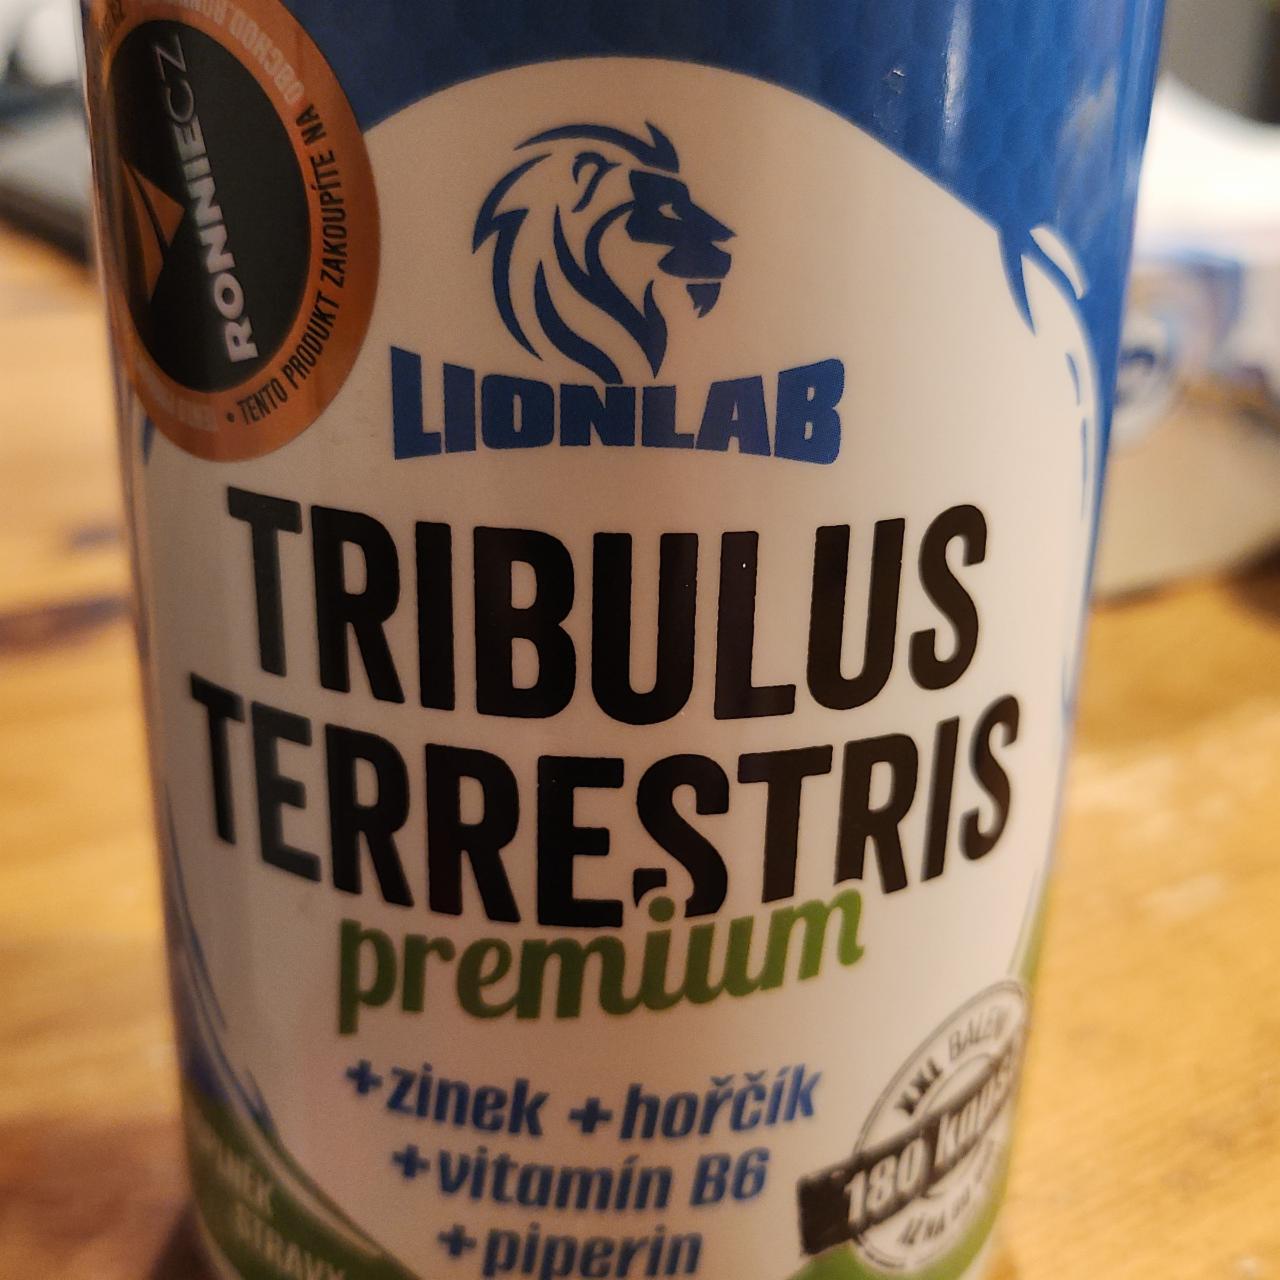 Fotografie - Tribulus Terrestris premium + zinek, hořčík, vitamín B6, piperin Lionlab